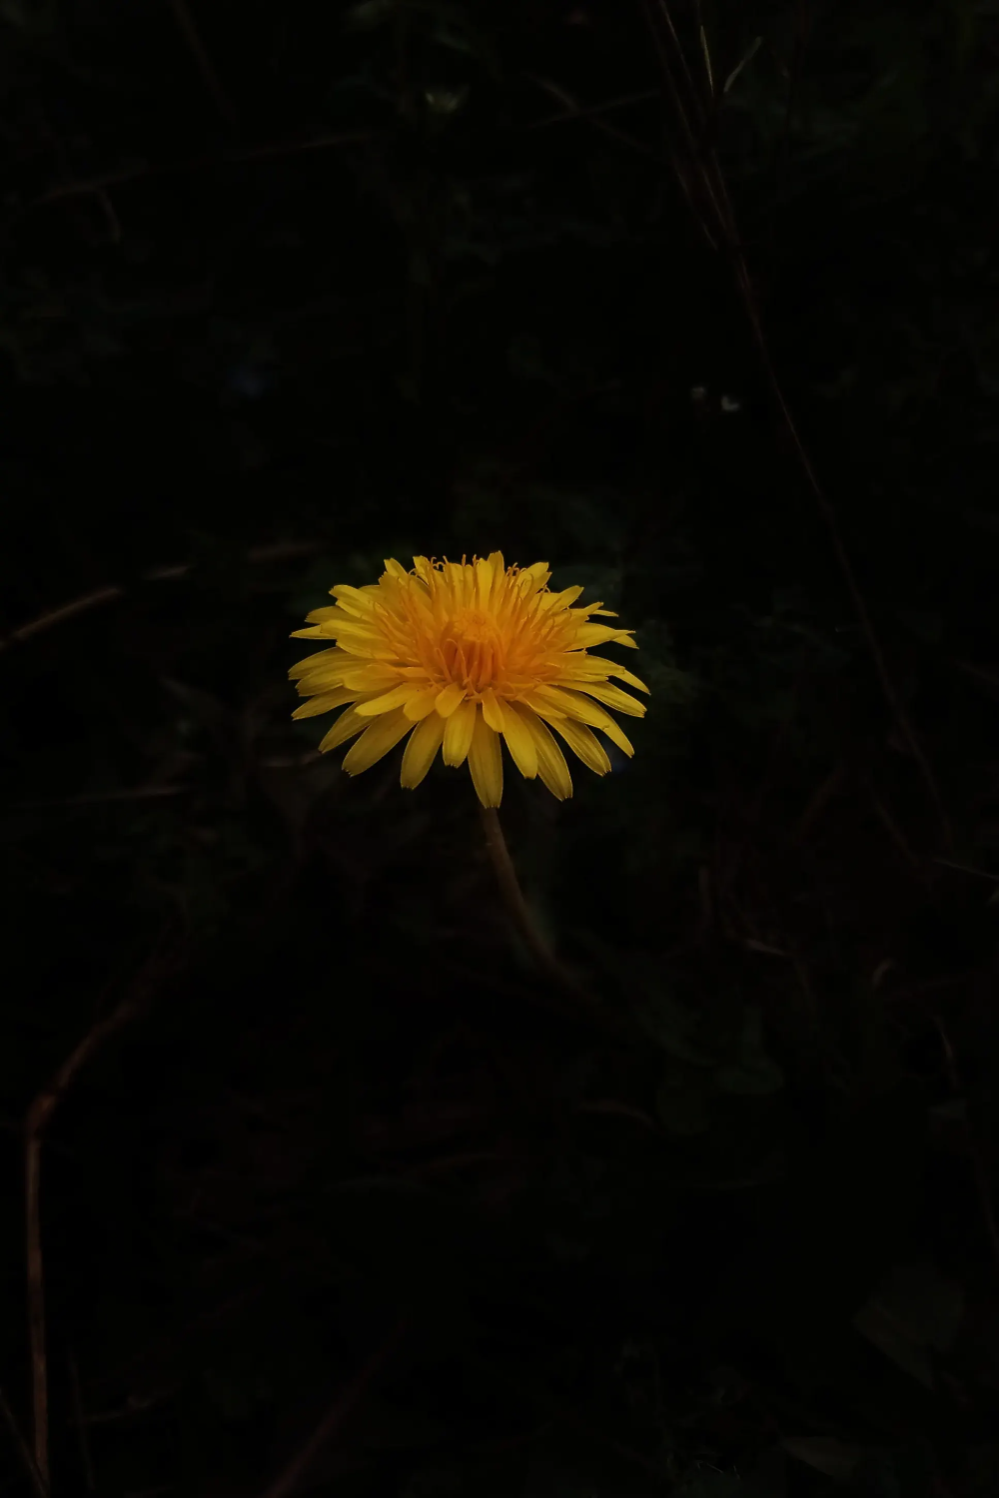 Yellow dandelion flower against a black background